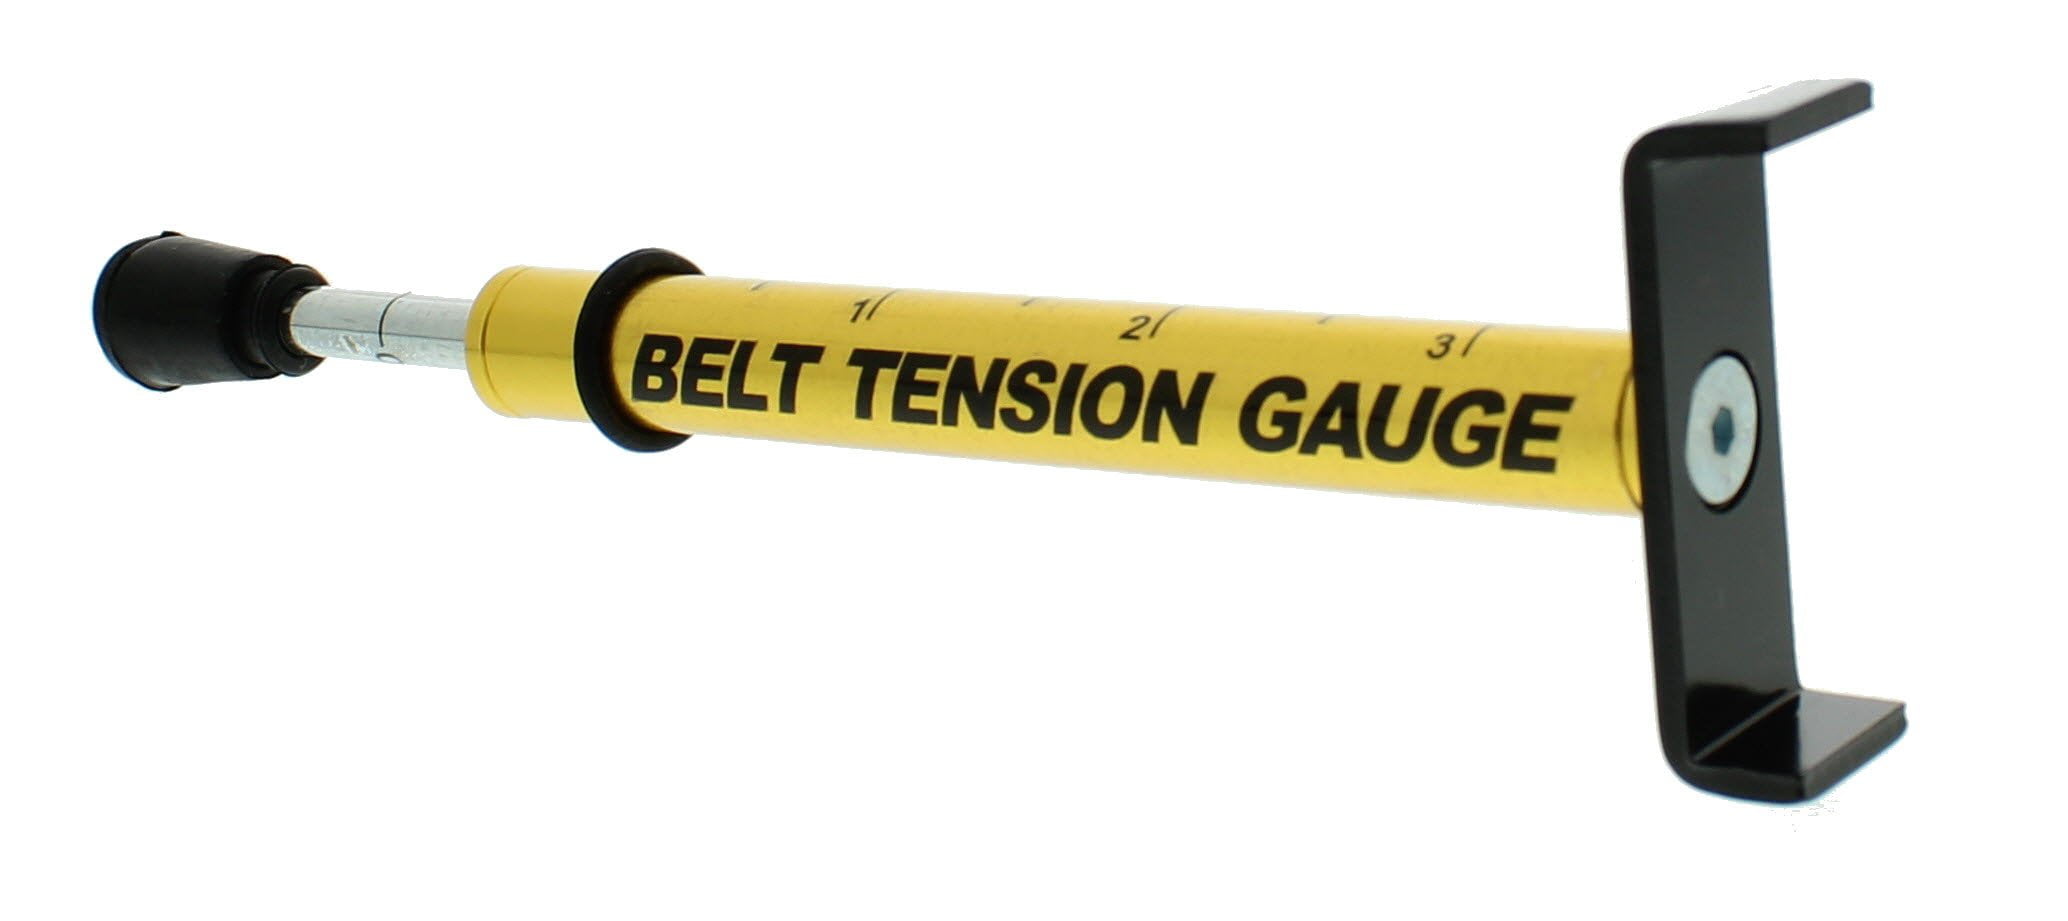 iag timing belt tensioner